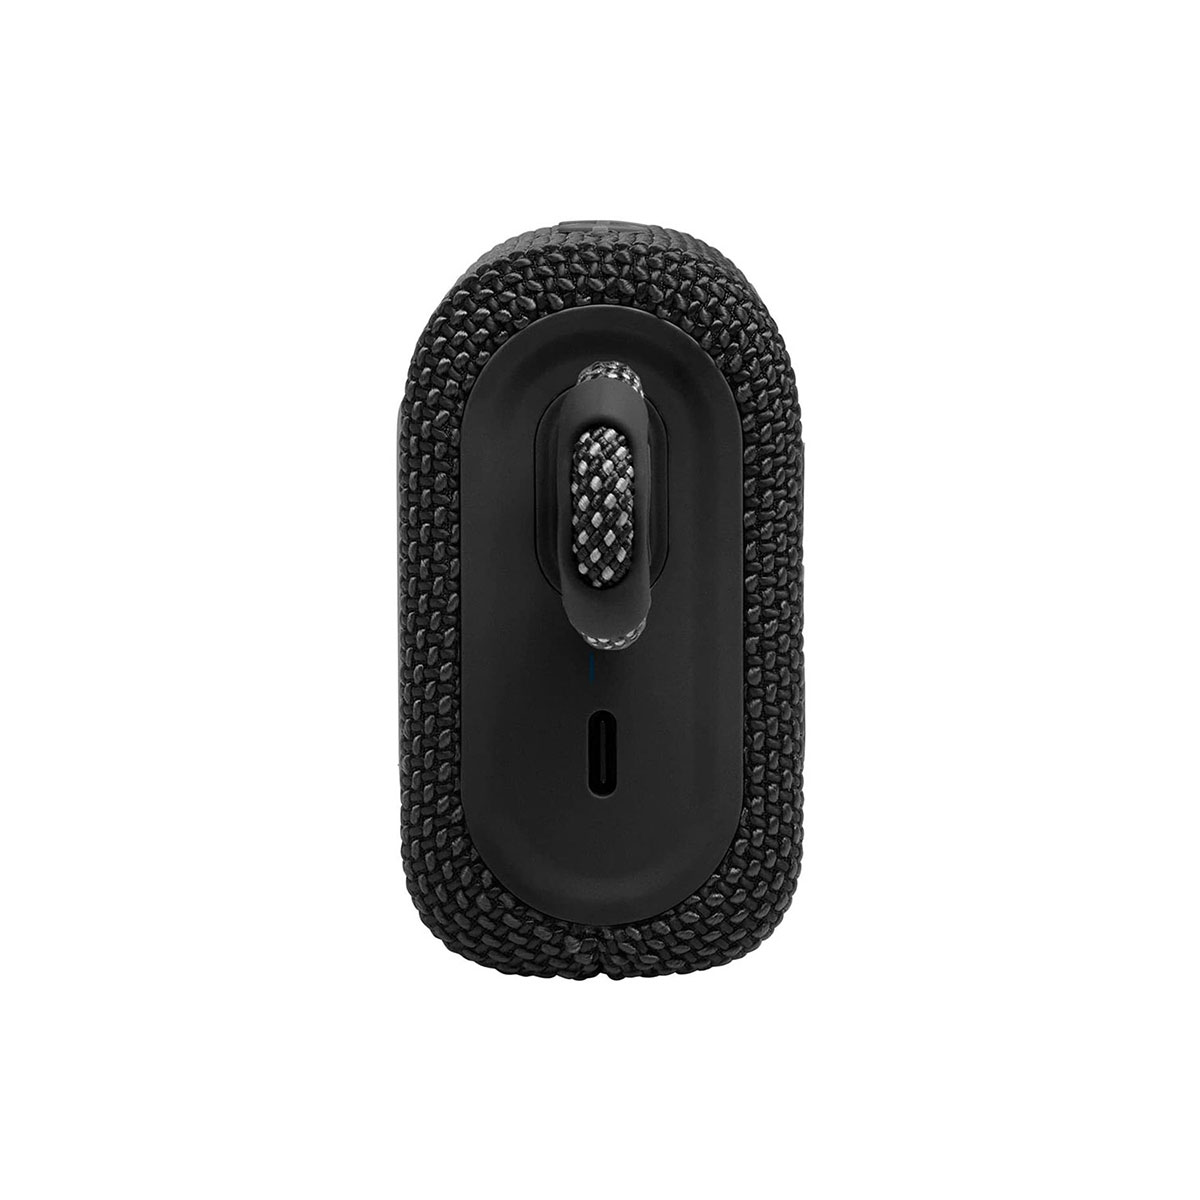 JBL - Go 3 Portable Bluetooth Speaker, Black